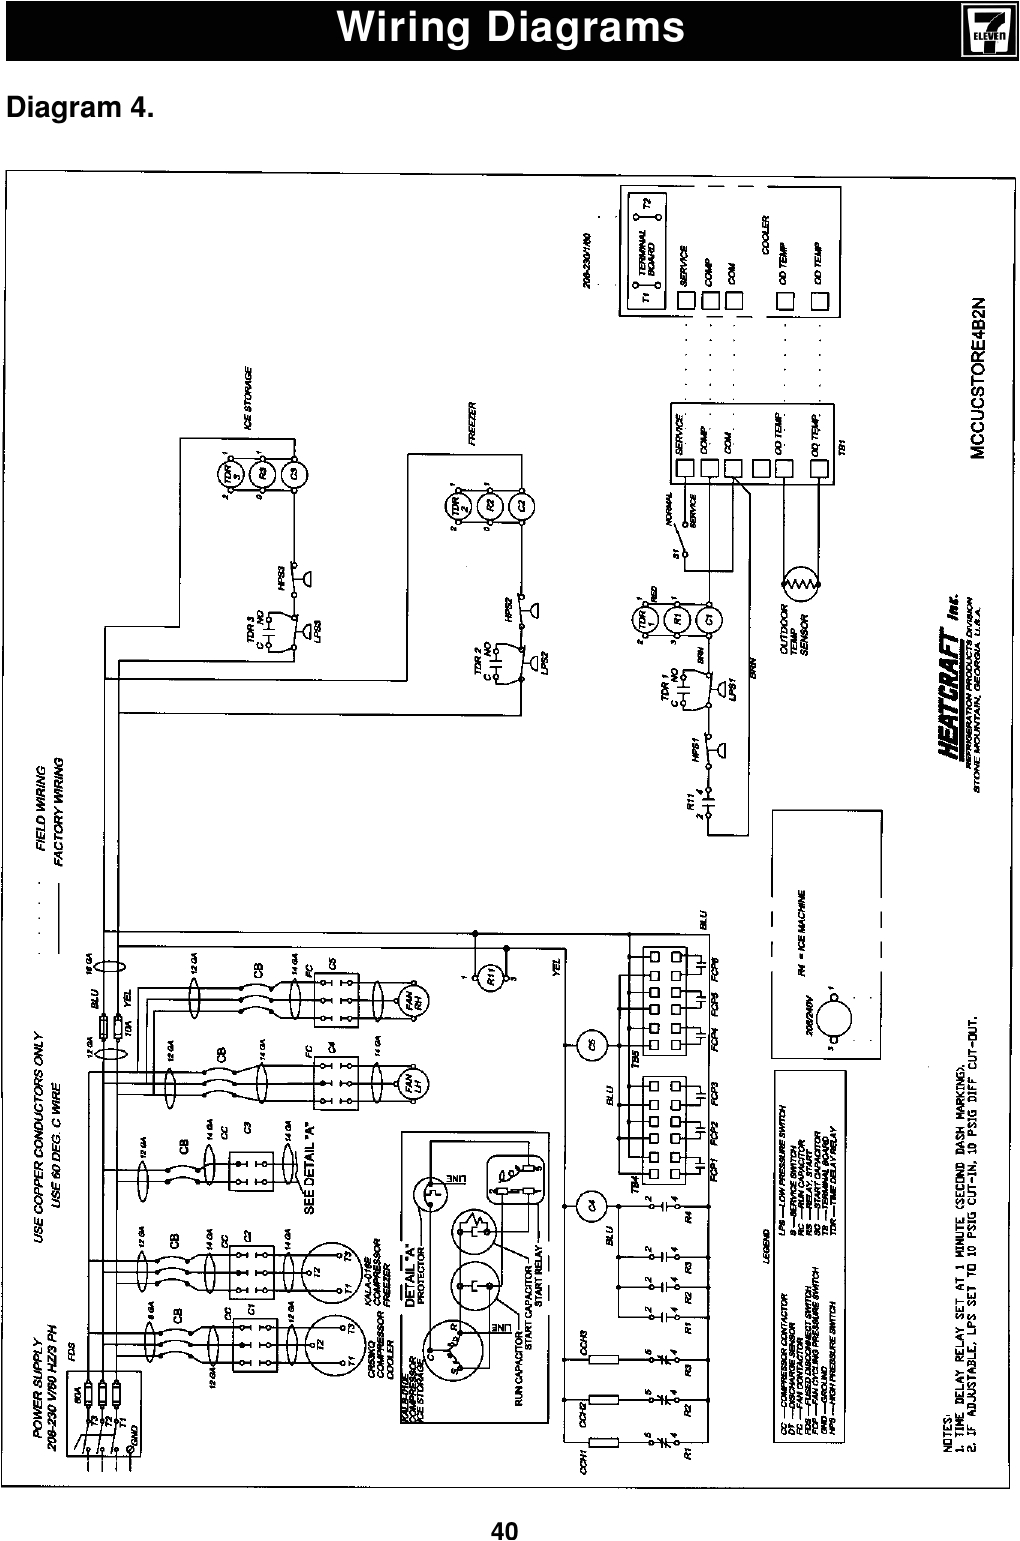 heatcraftrefrigerationproductsiiusersmanual564774 89527029 user guide page 40 png